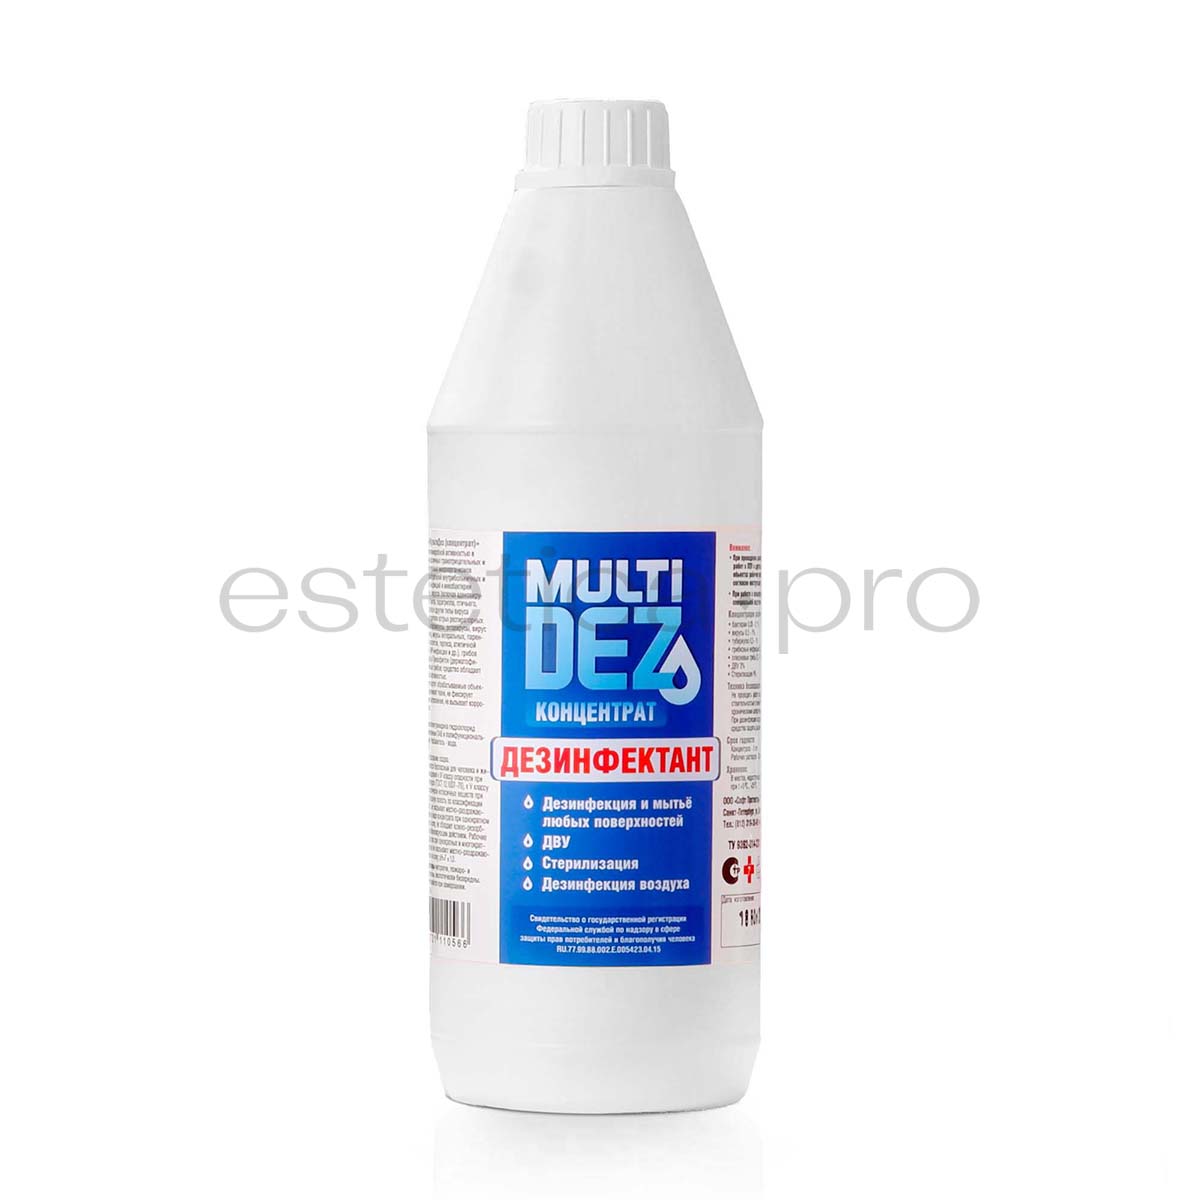 Дезинфектор Мультидез, 1 литр (концентрат)